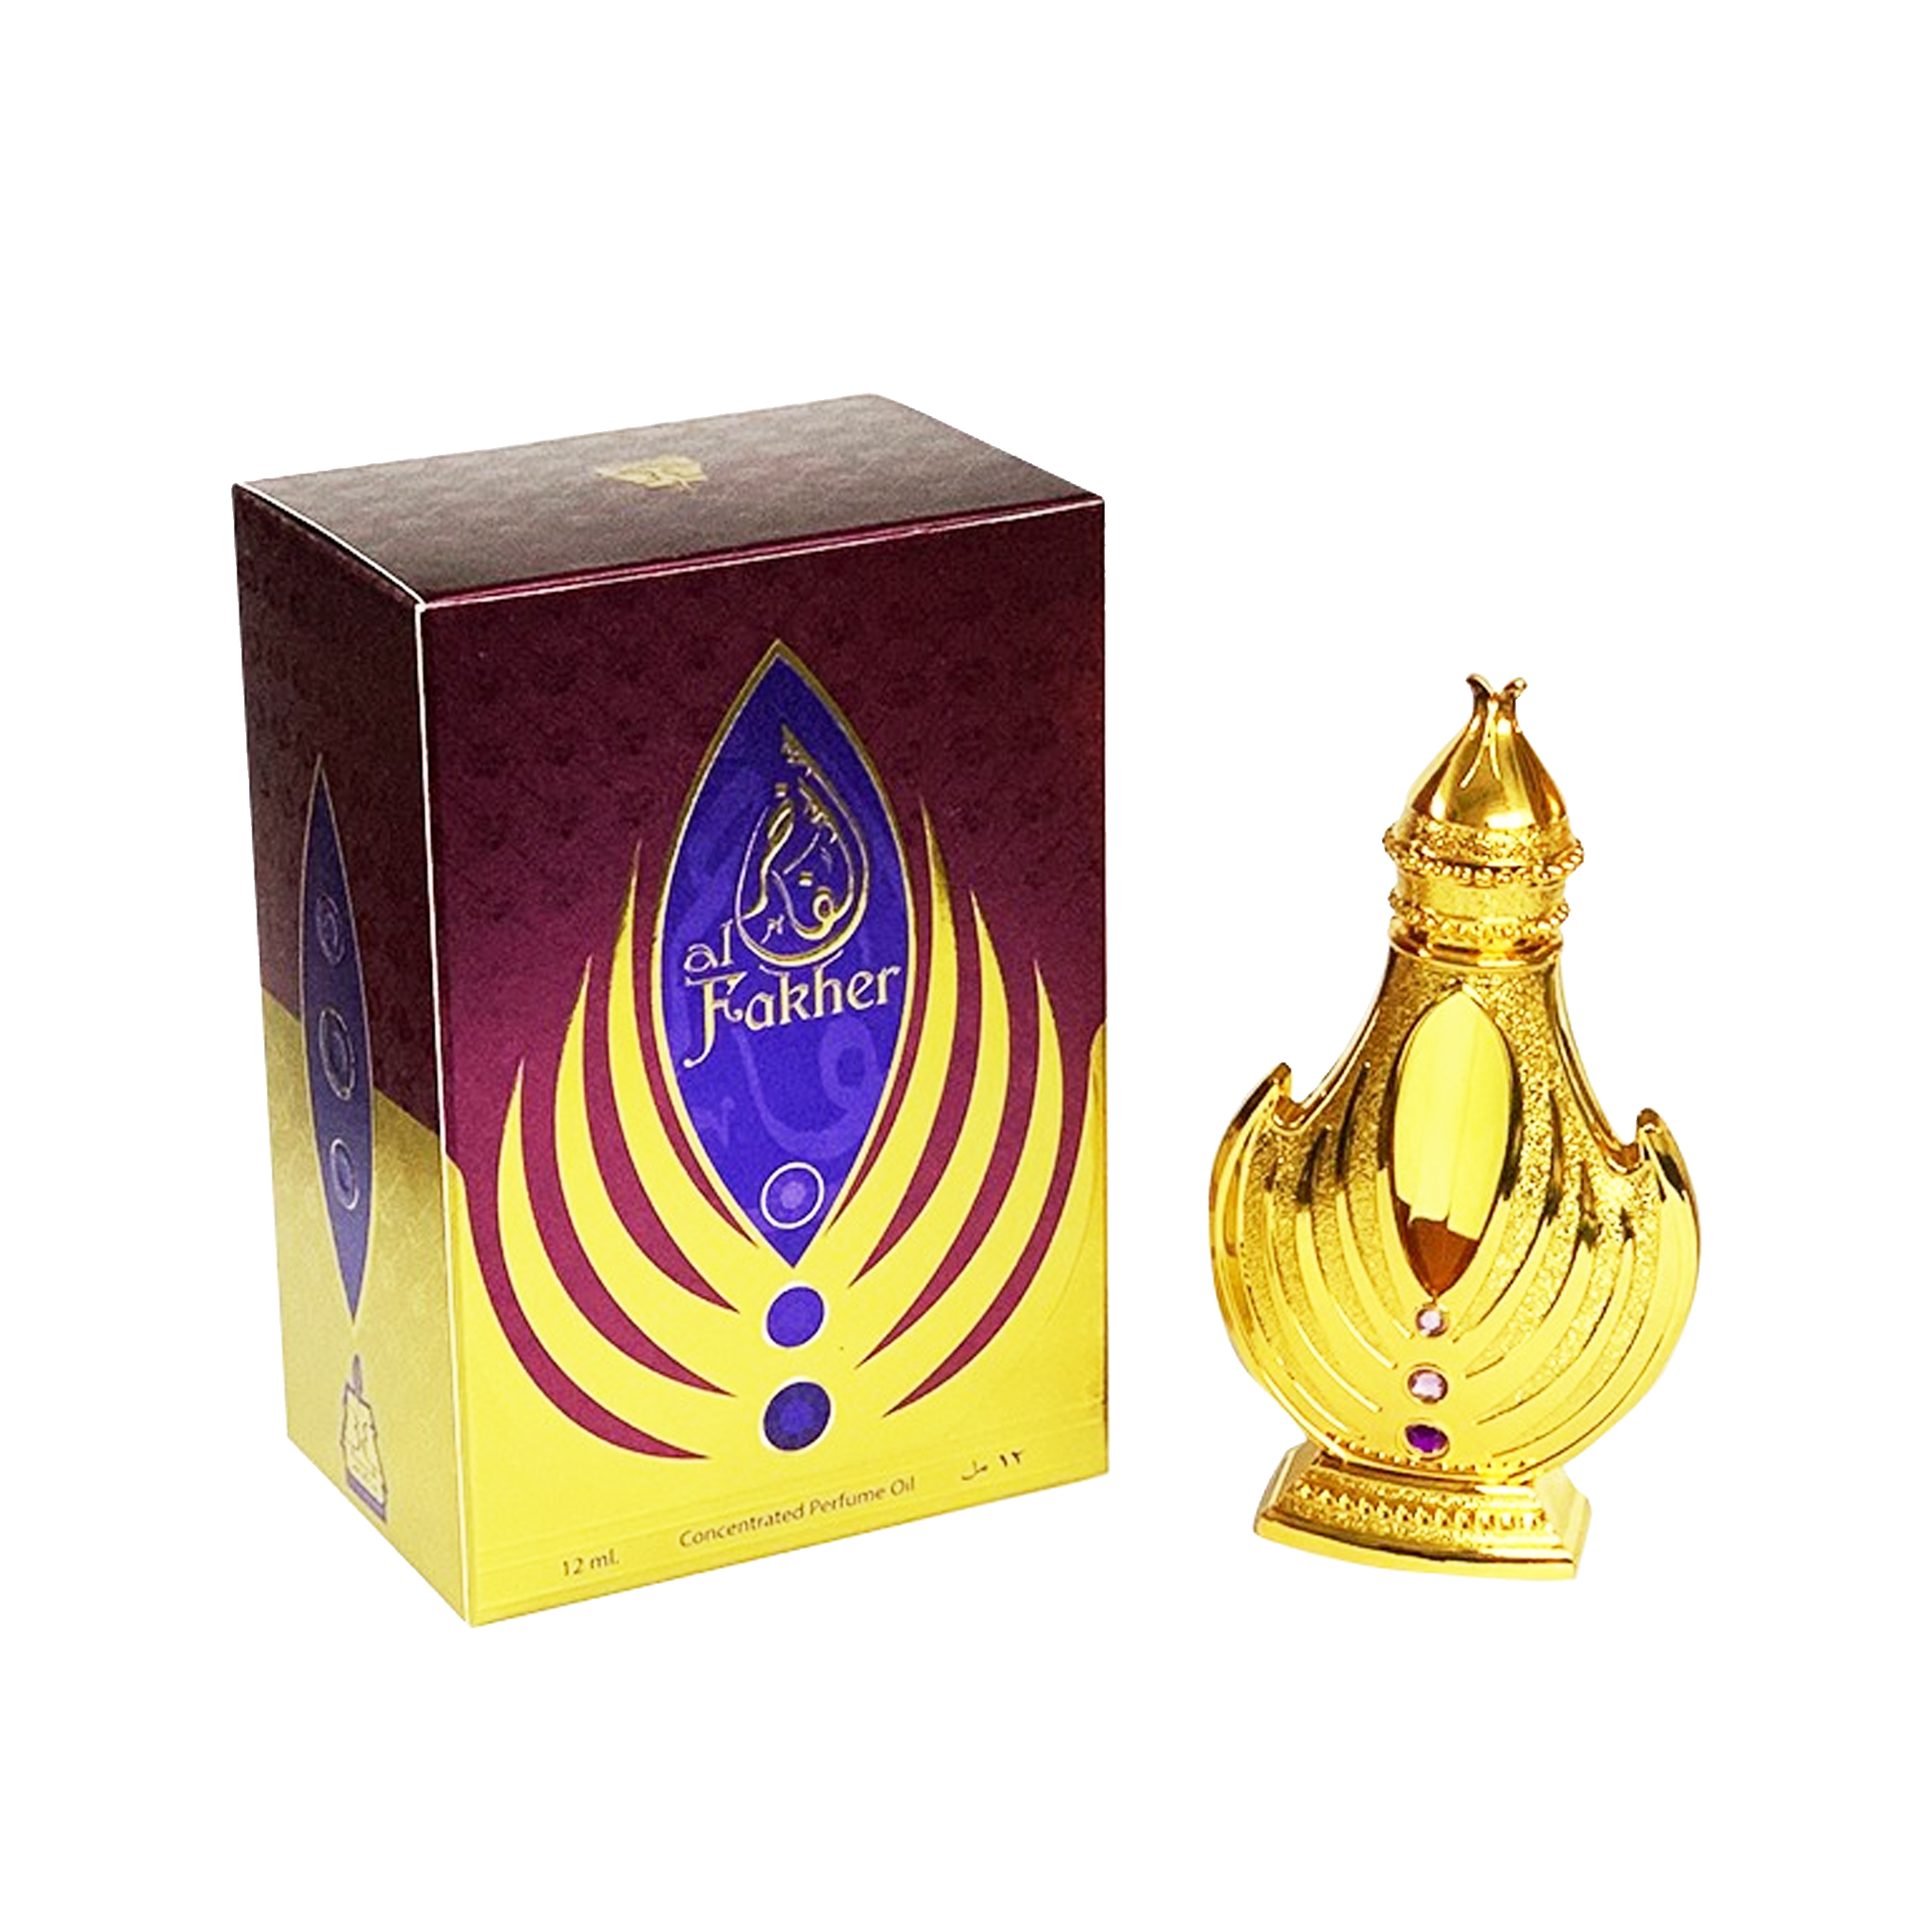 Al Fakher Perfume 12Ml